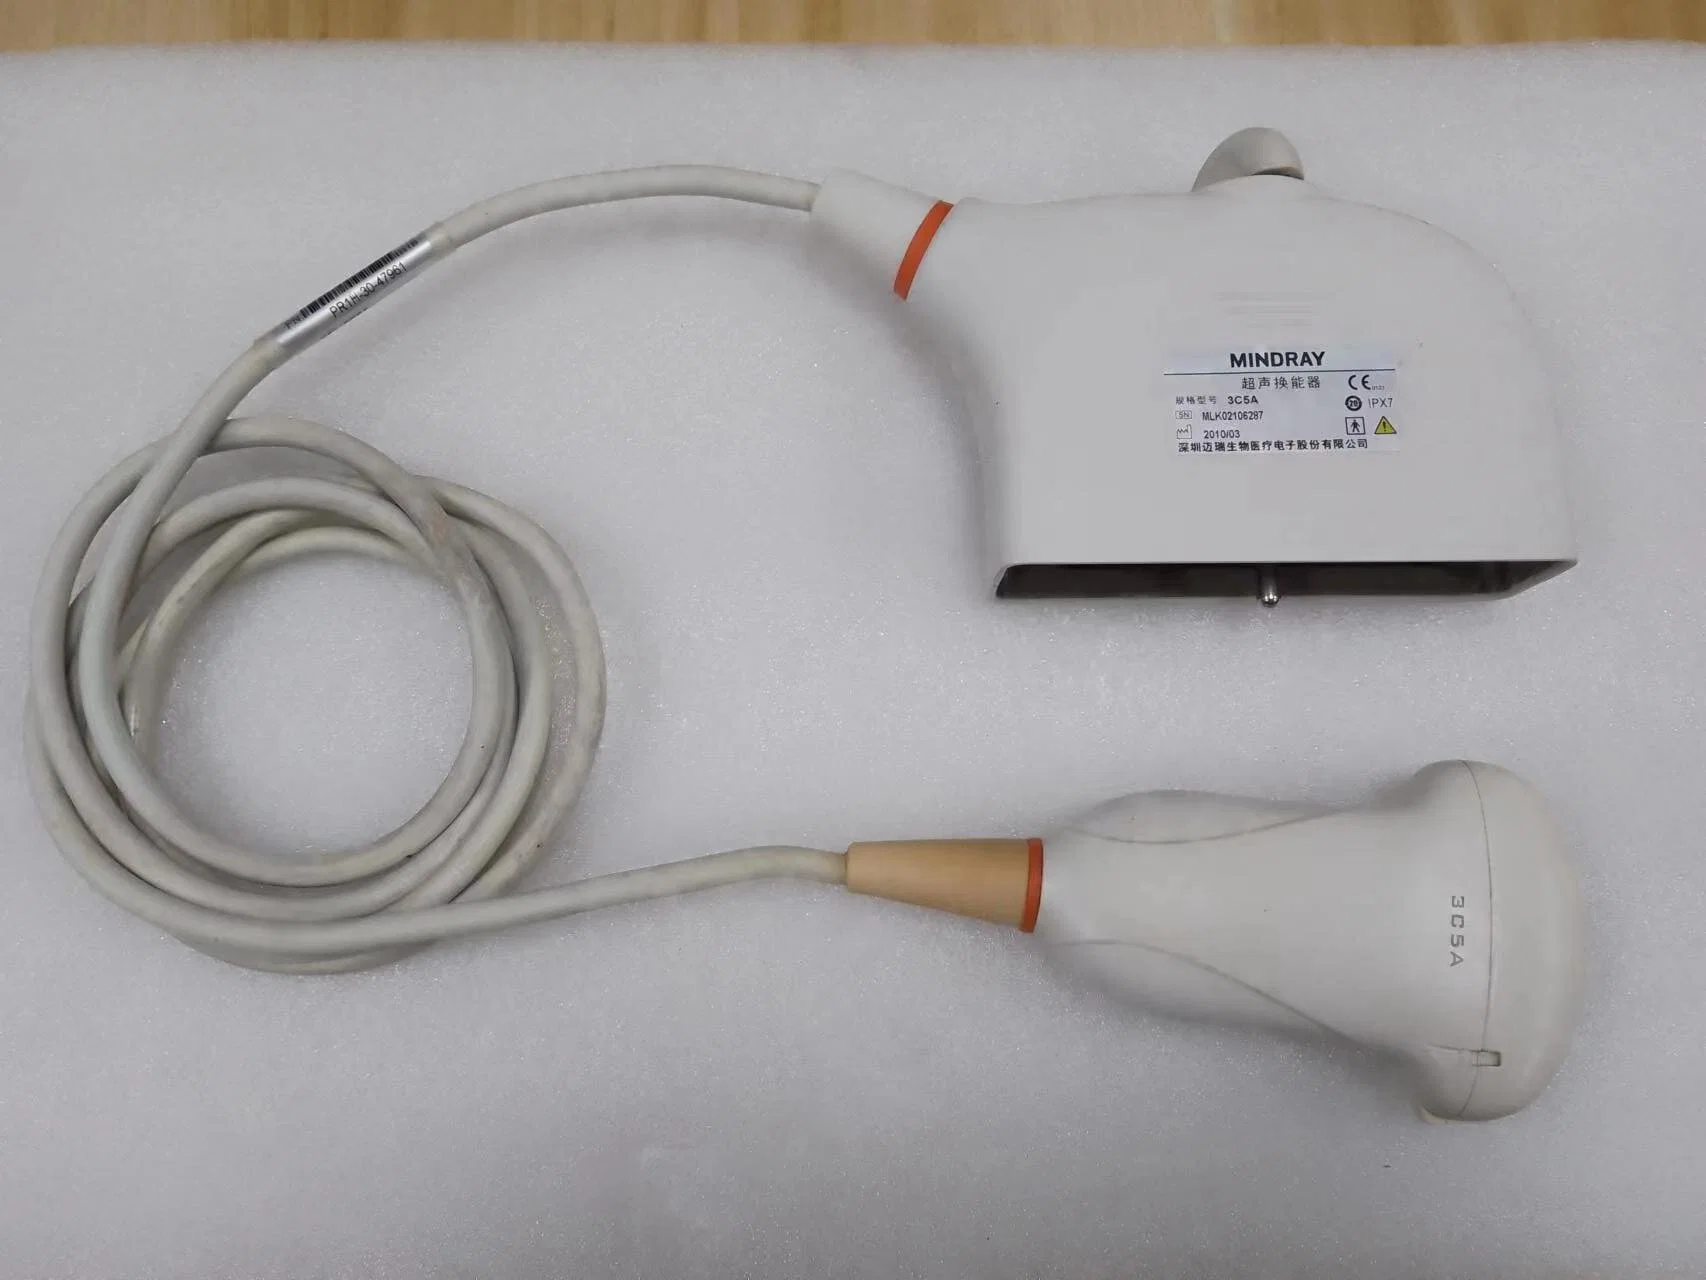 Mindray 3c5a Ultrasound Transducer/Probe